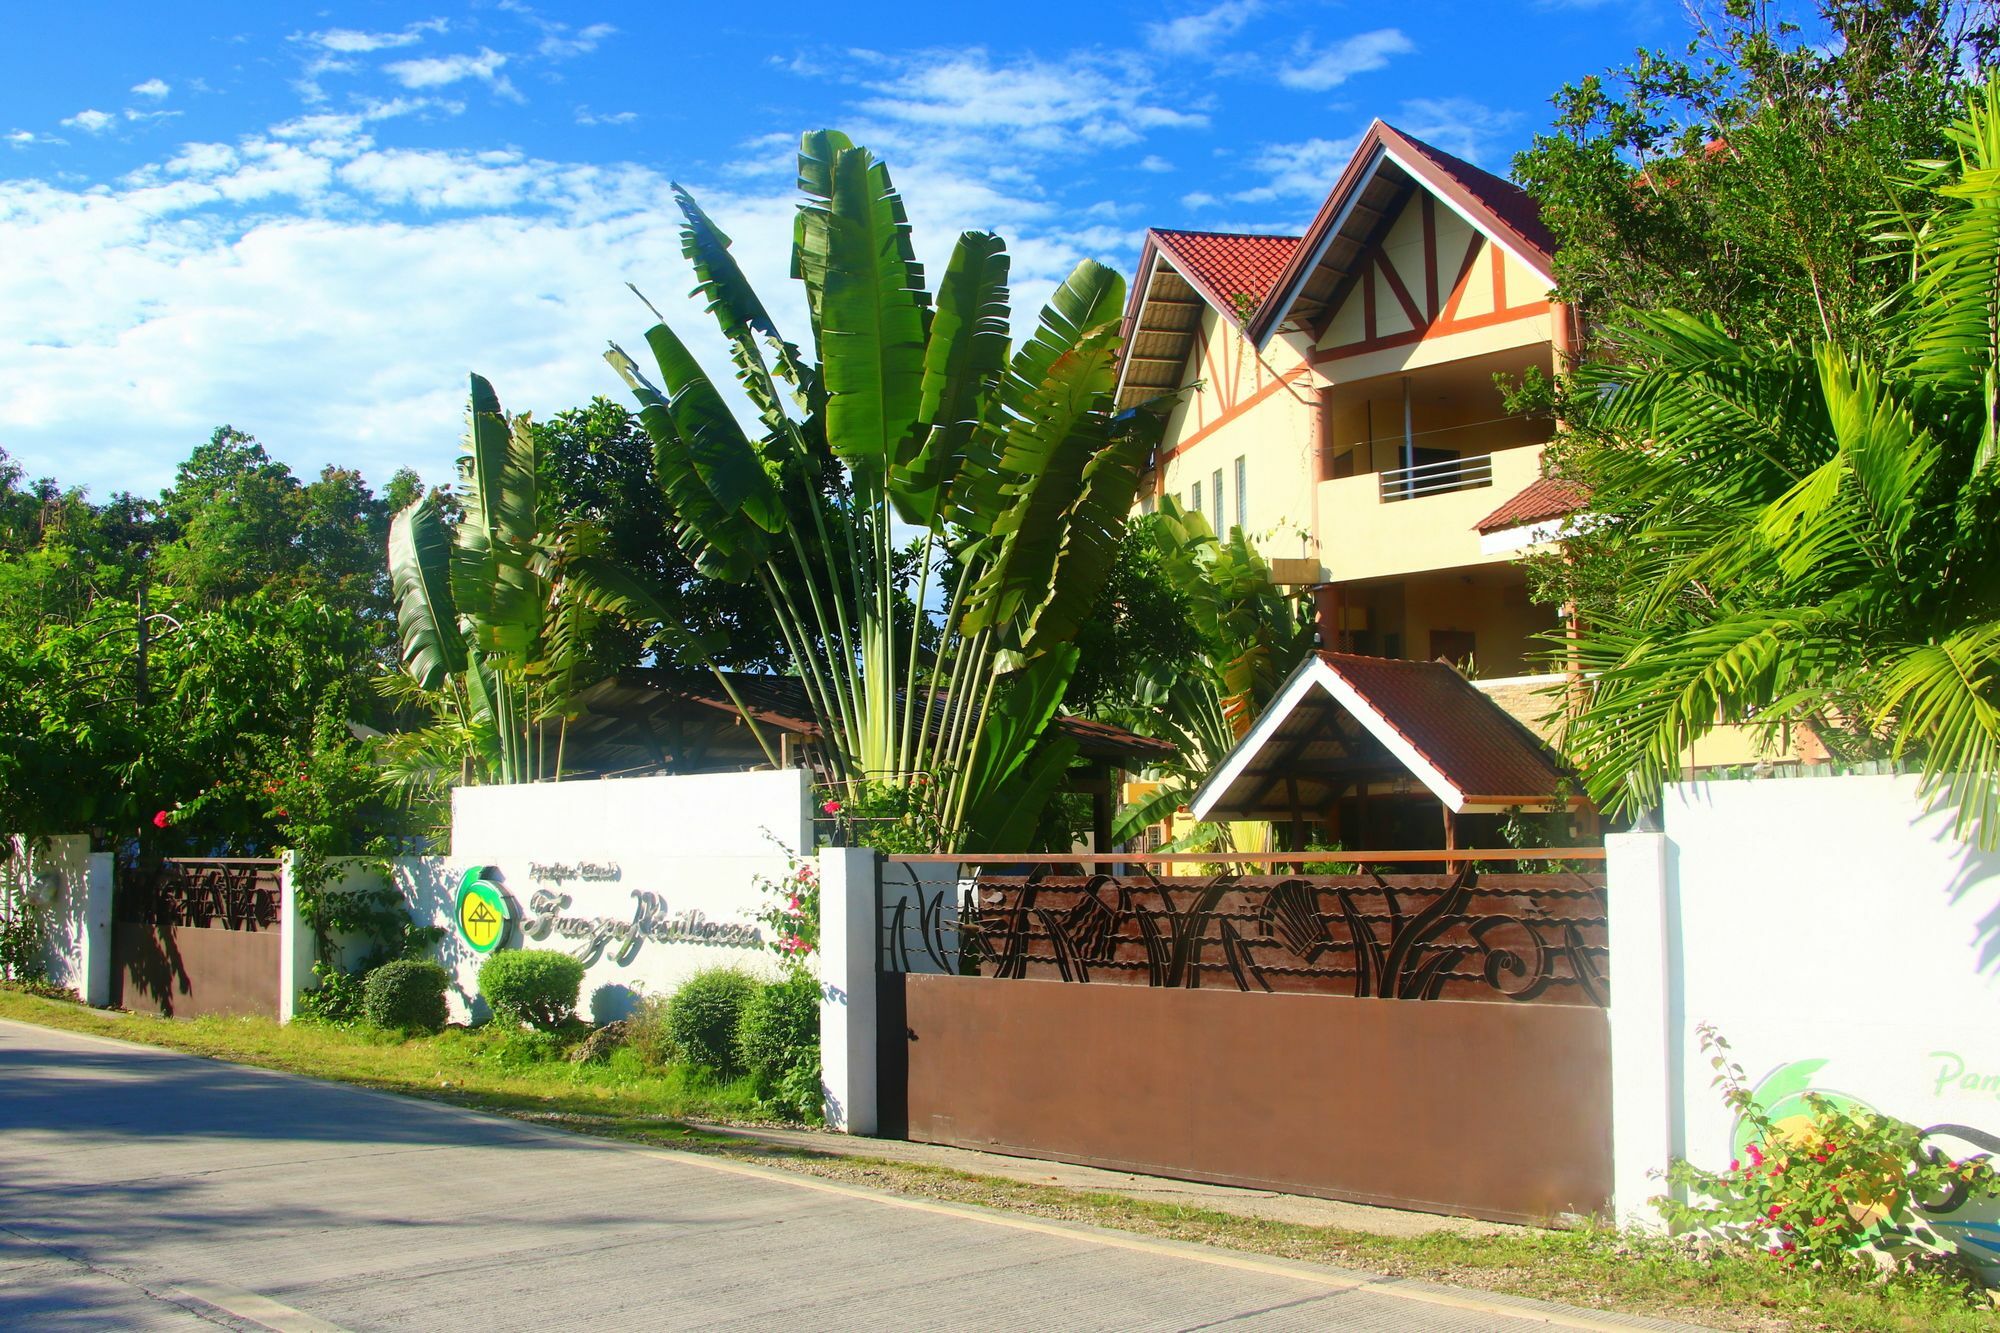 Panglao Island Franzen Residences Exterior photo